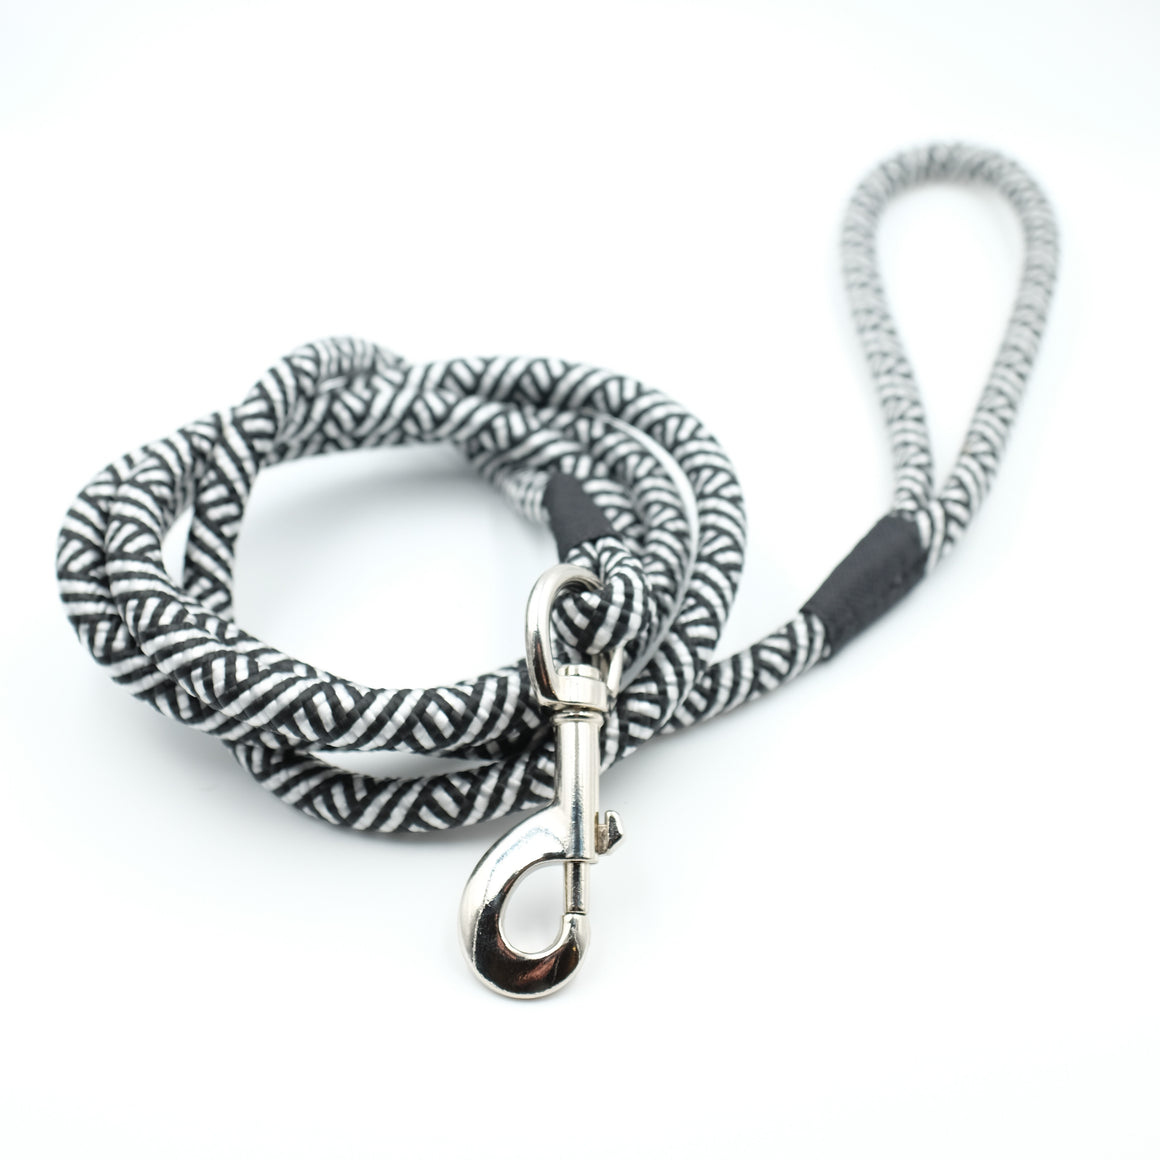 Black & White Rope Dog Leash, 6 foot length